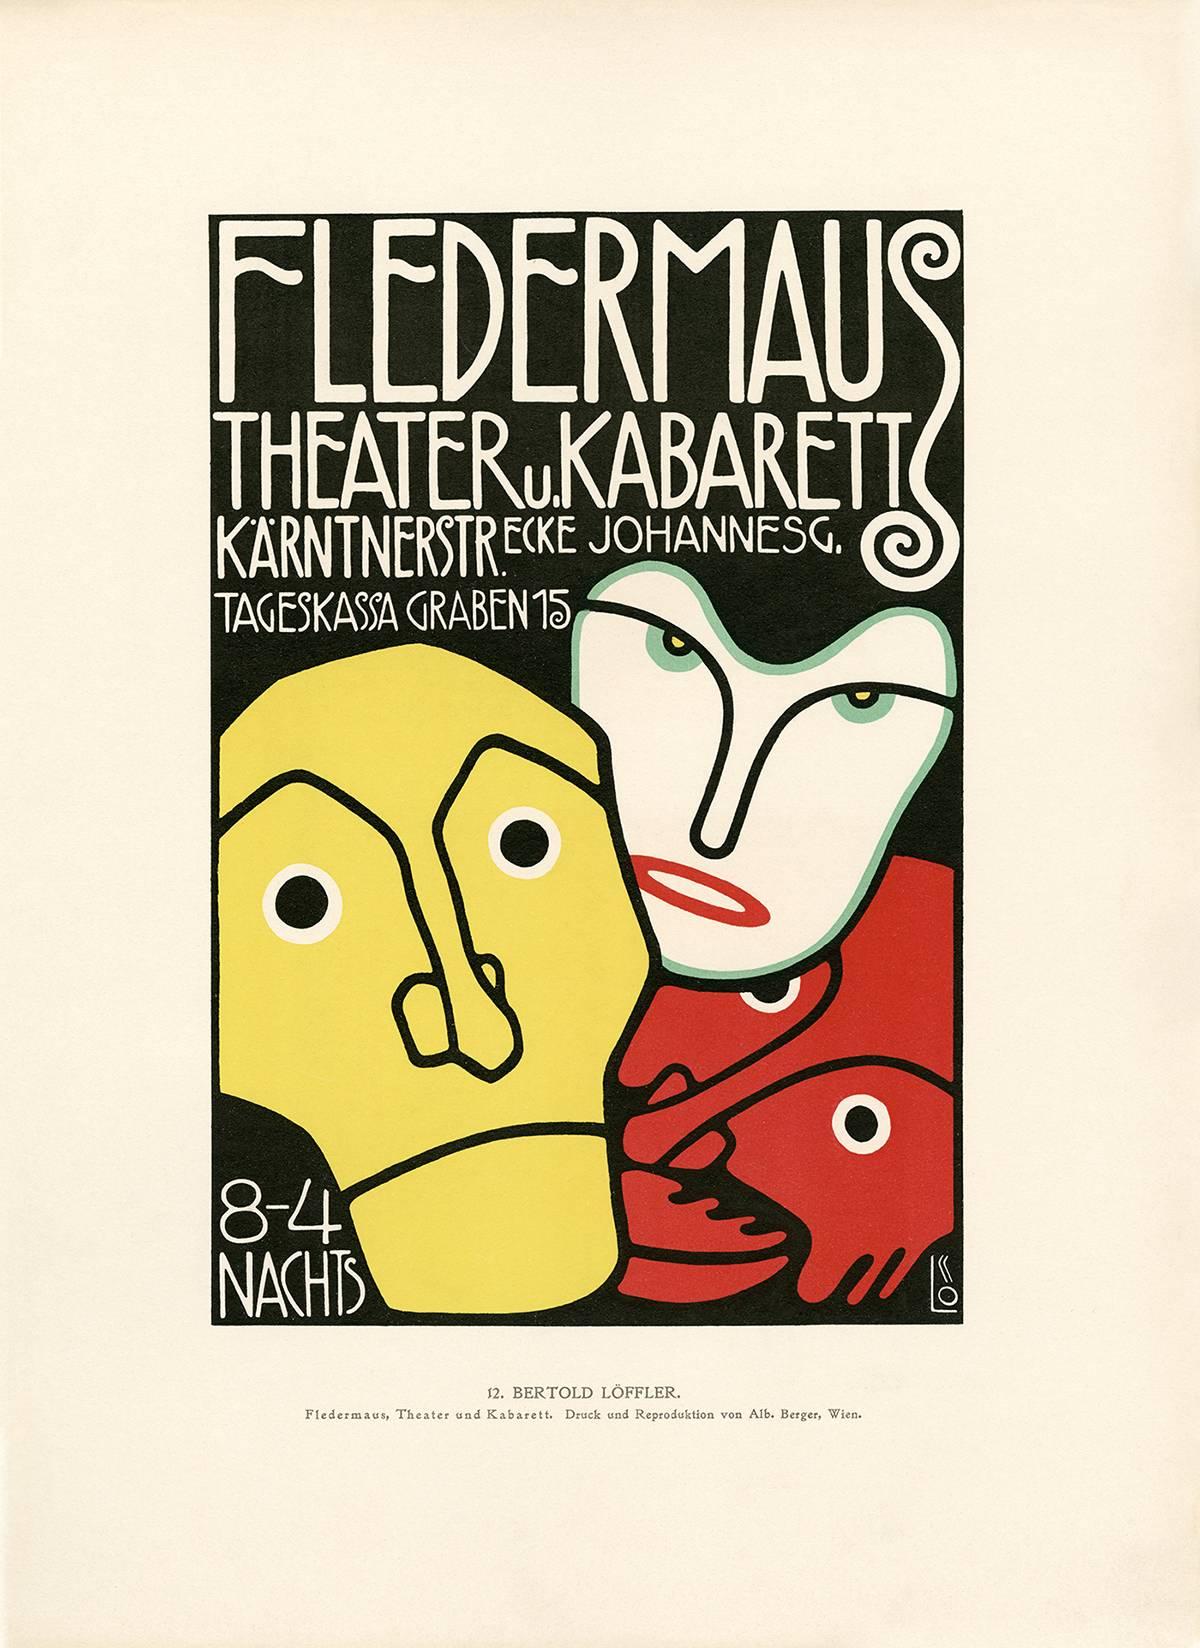 Berthold Löffler Figurative Print - Ottokar Mascha Folio, plate 12: "Fledermaus Theatre und Kaberett Poster"